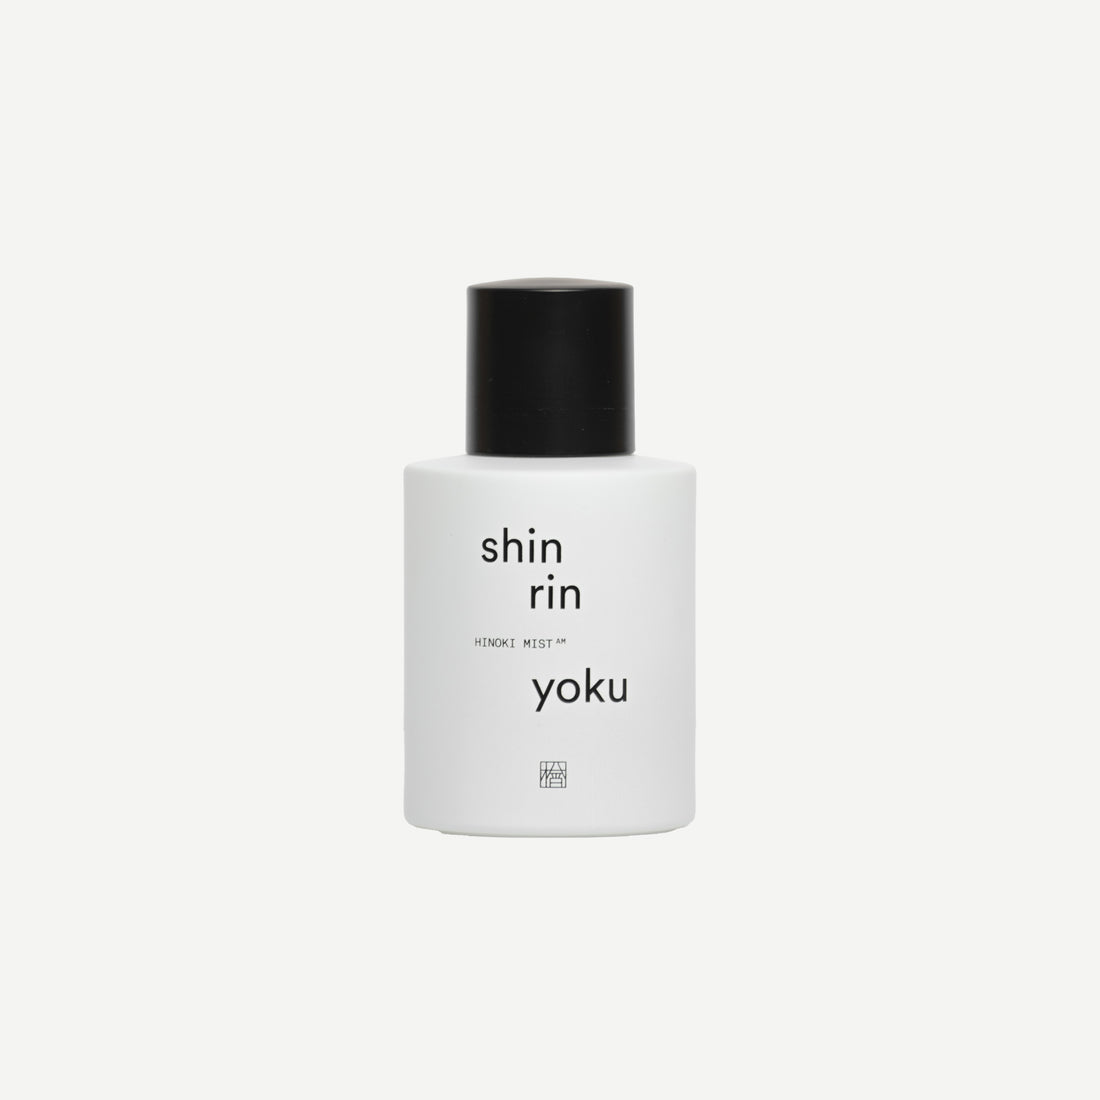 Shin rin yoku - HINOKI ROOM MIST